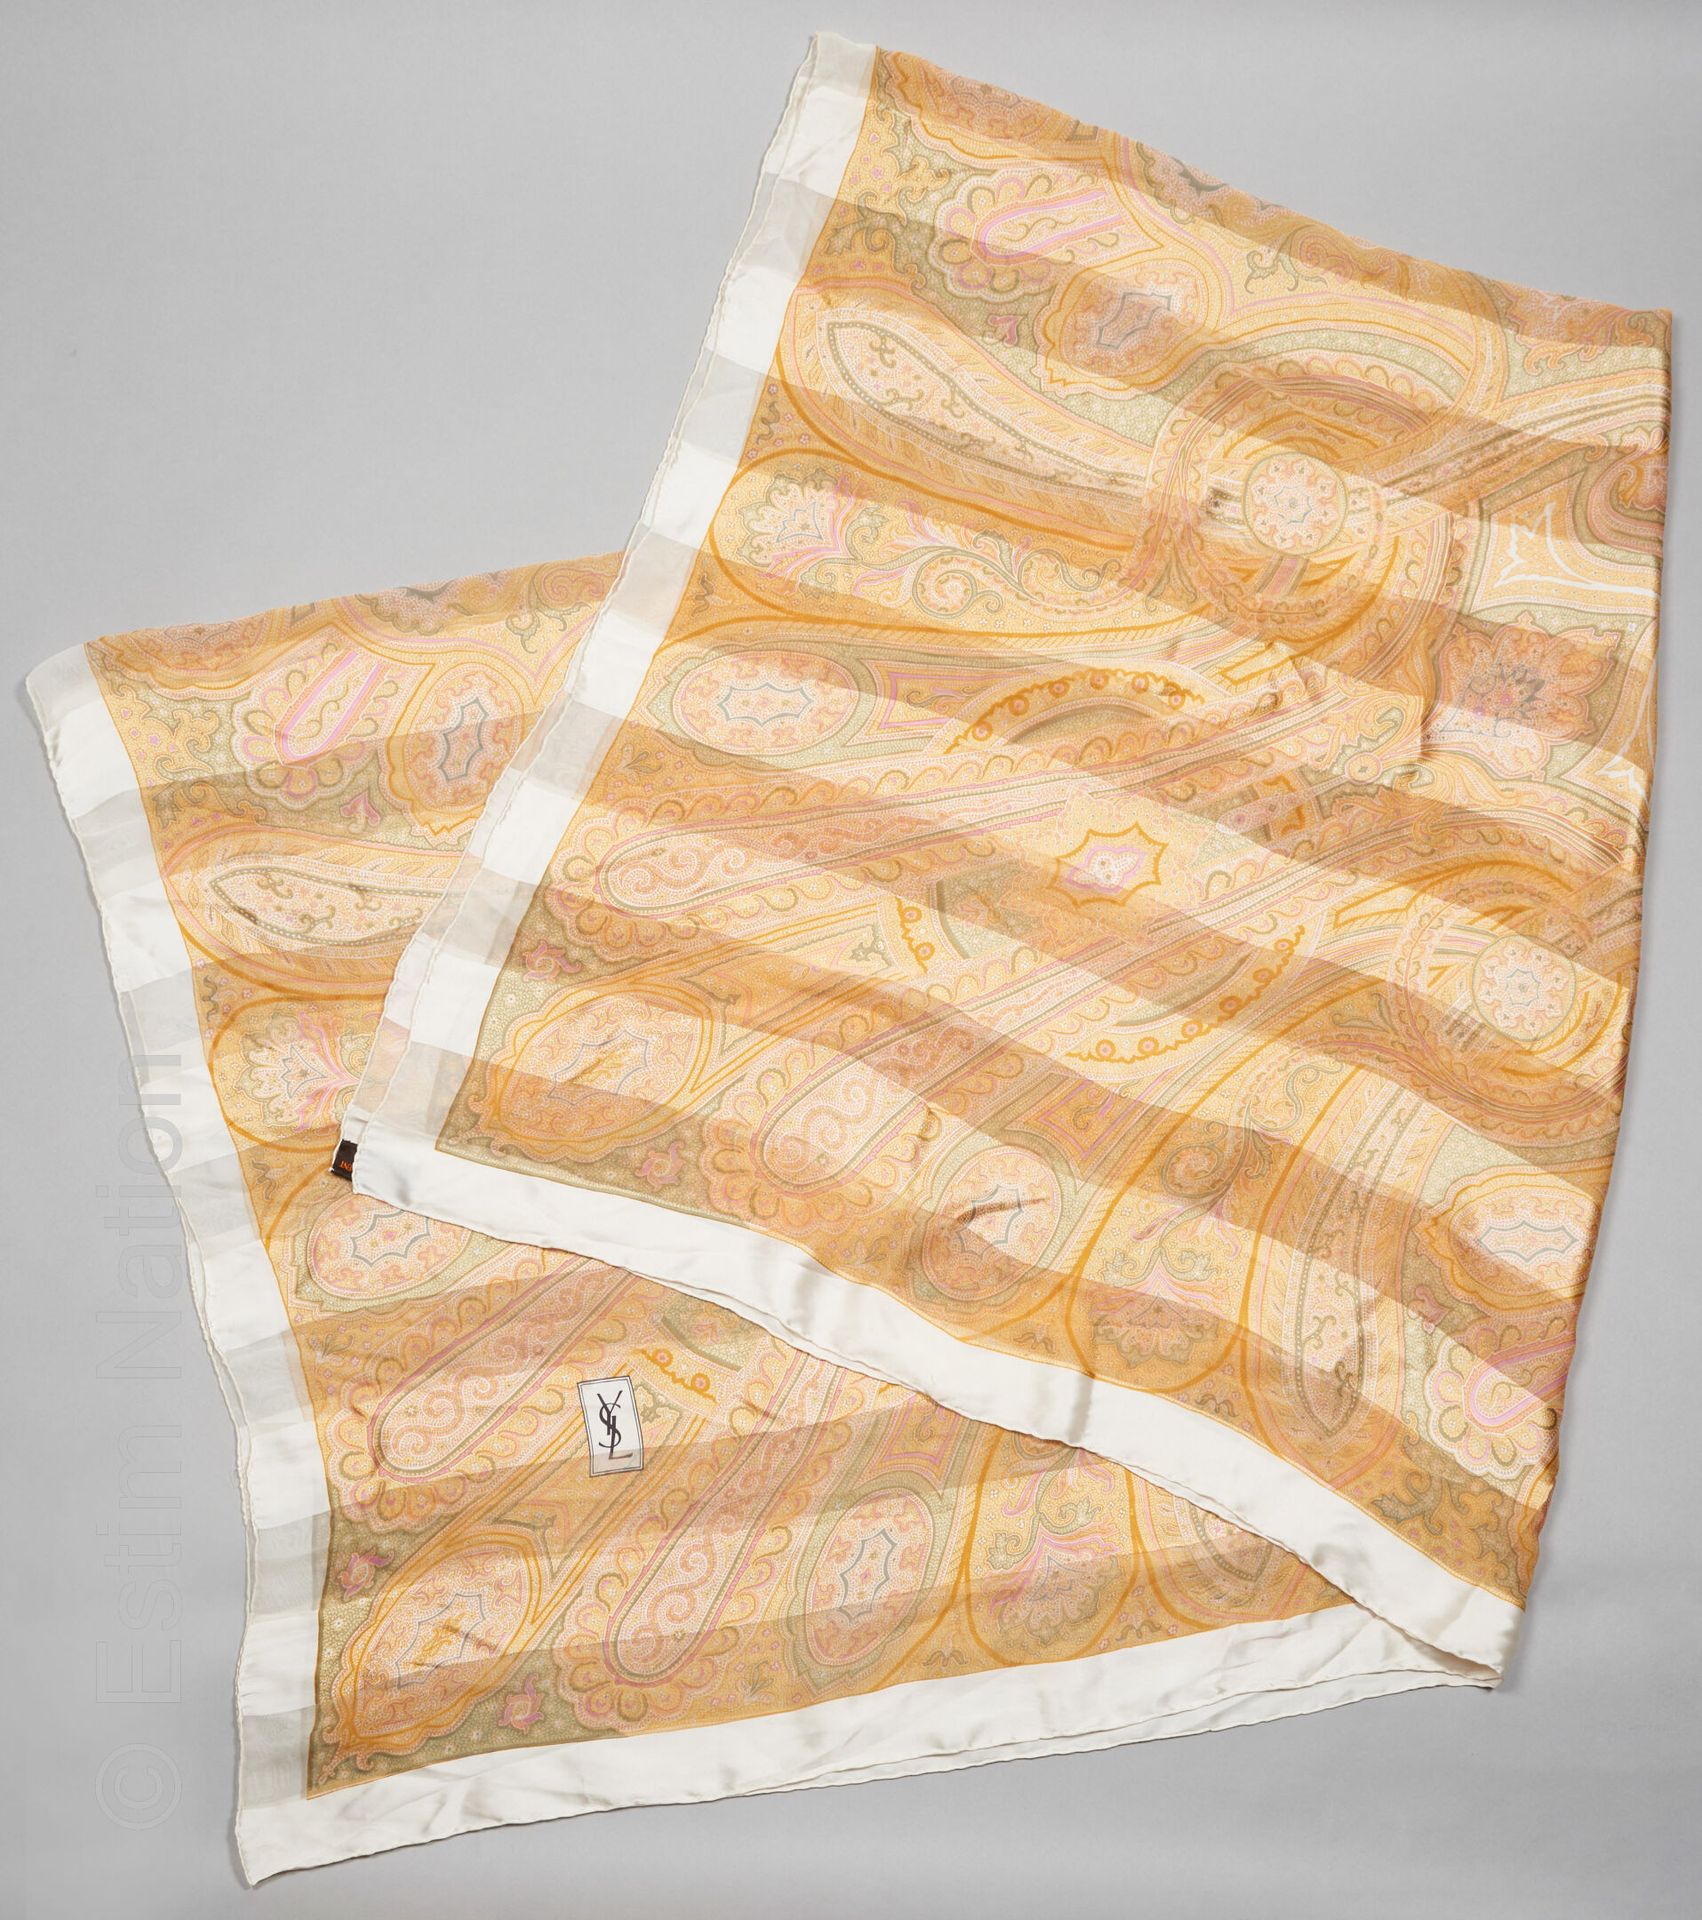 YVES SAINT LAURENT FOULARDS 真丝和丝质雪纺印有羊绒的大方形（180厘米边）（真丝一角略微变细）。